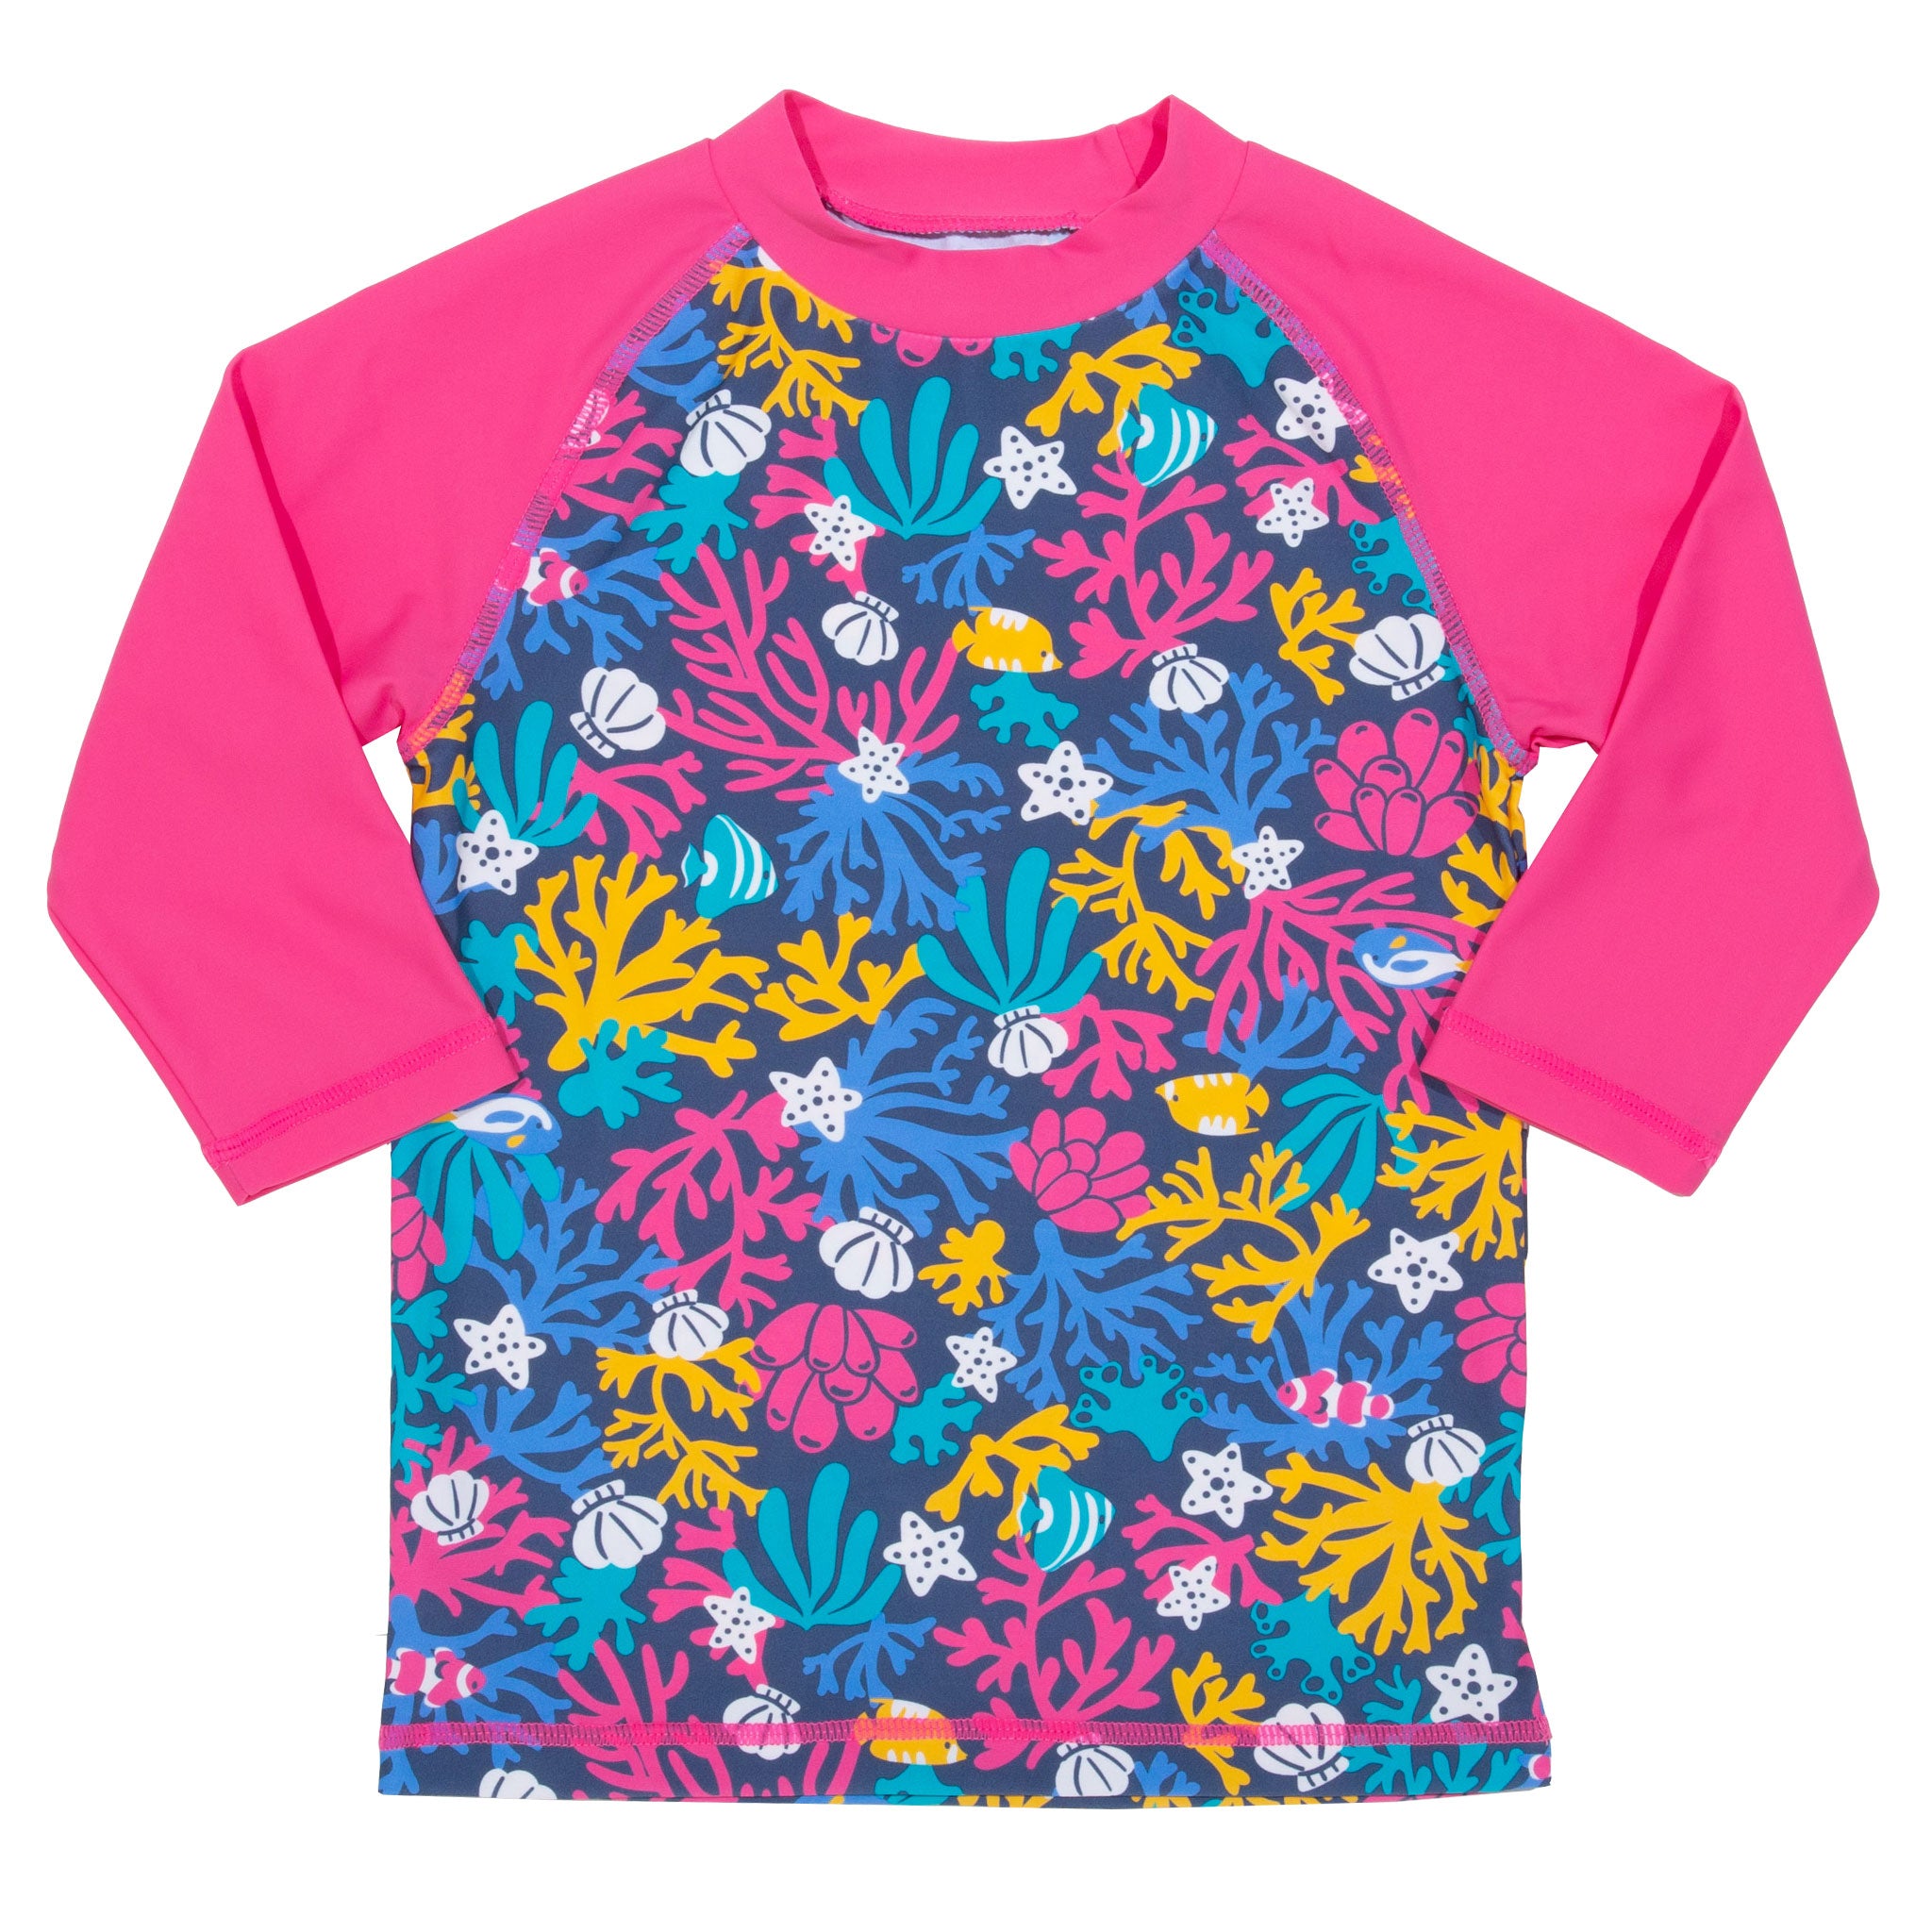 Kite Clothing Coral reef rash vest